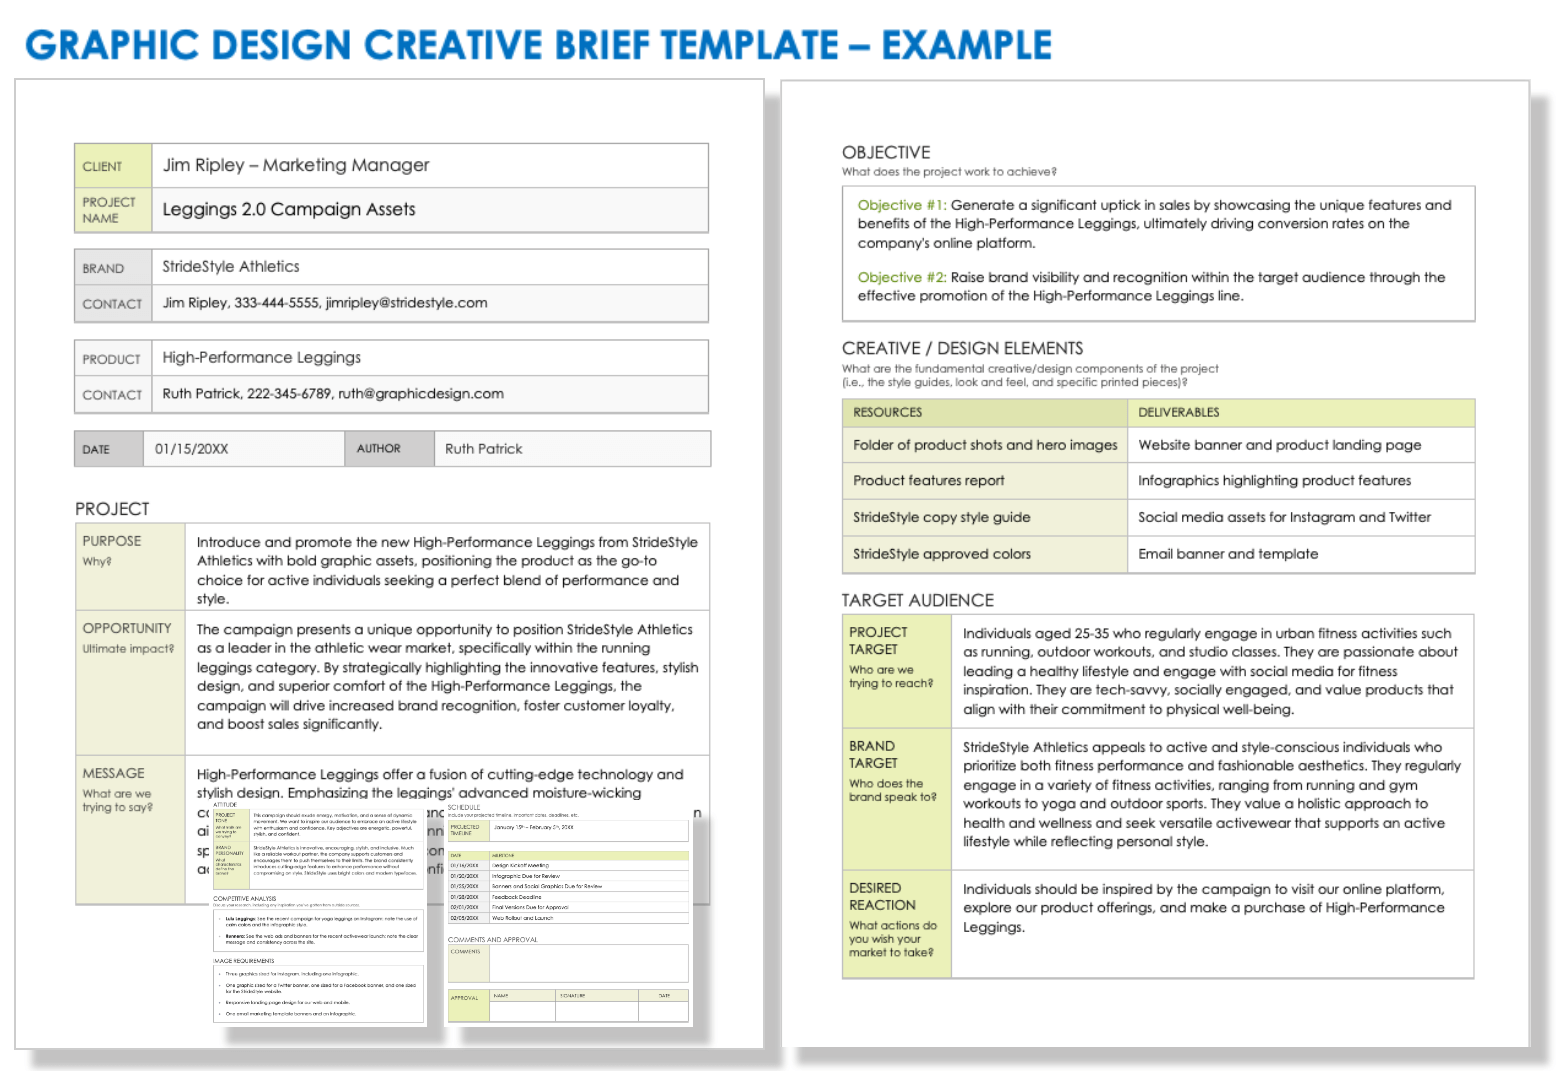 Graphic Design Creative Brief Example Template